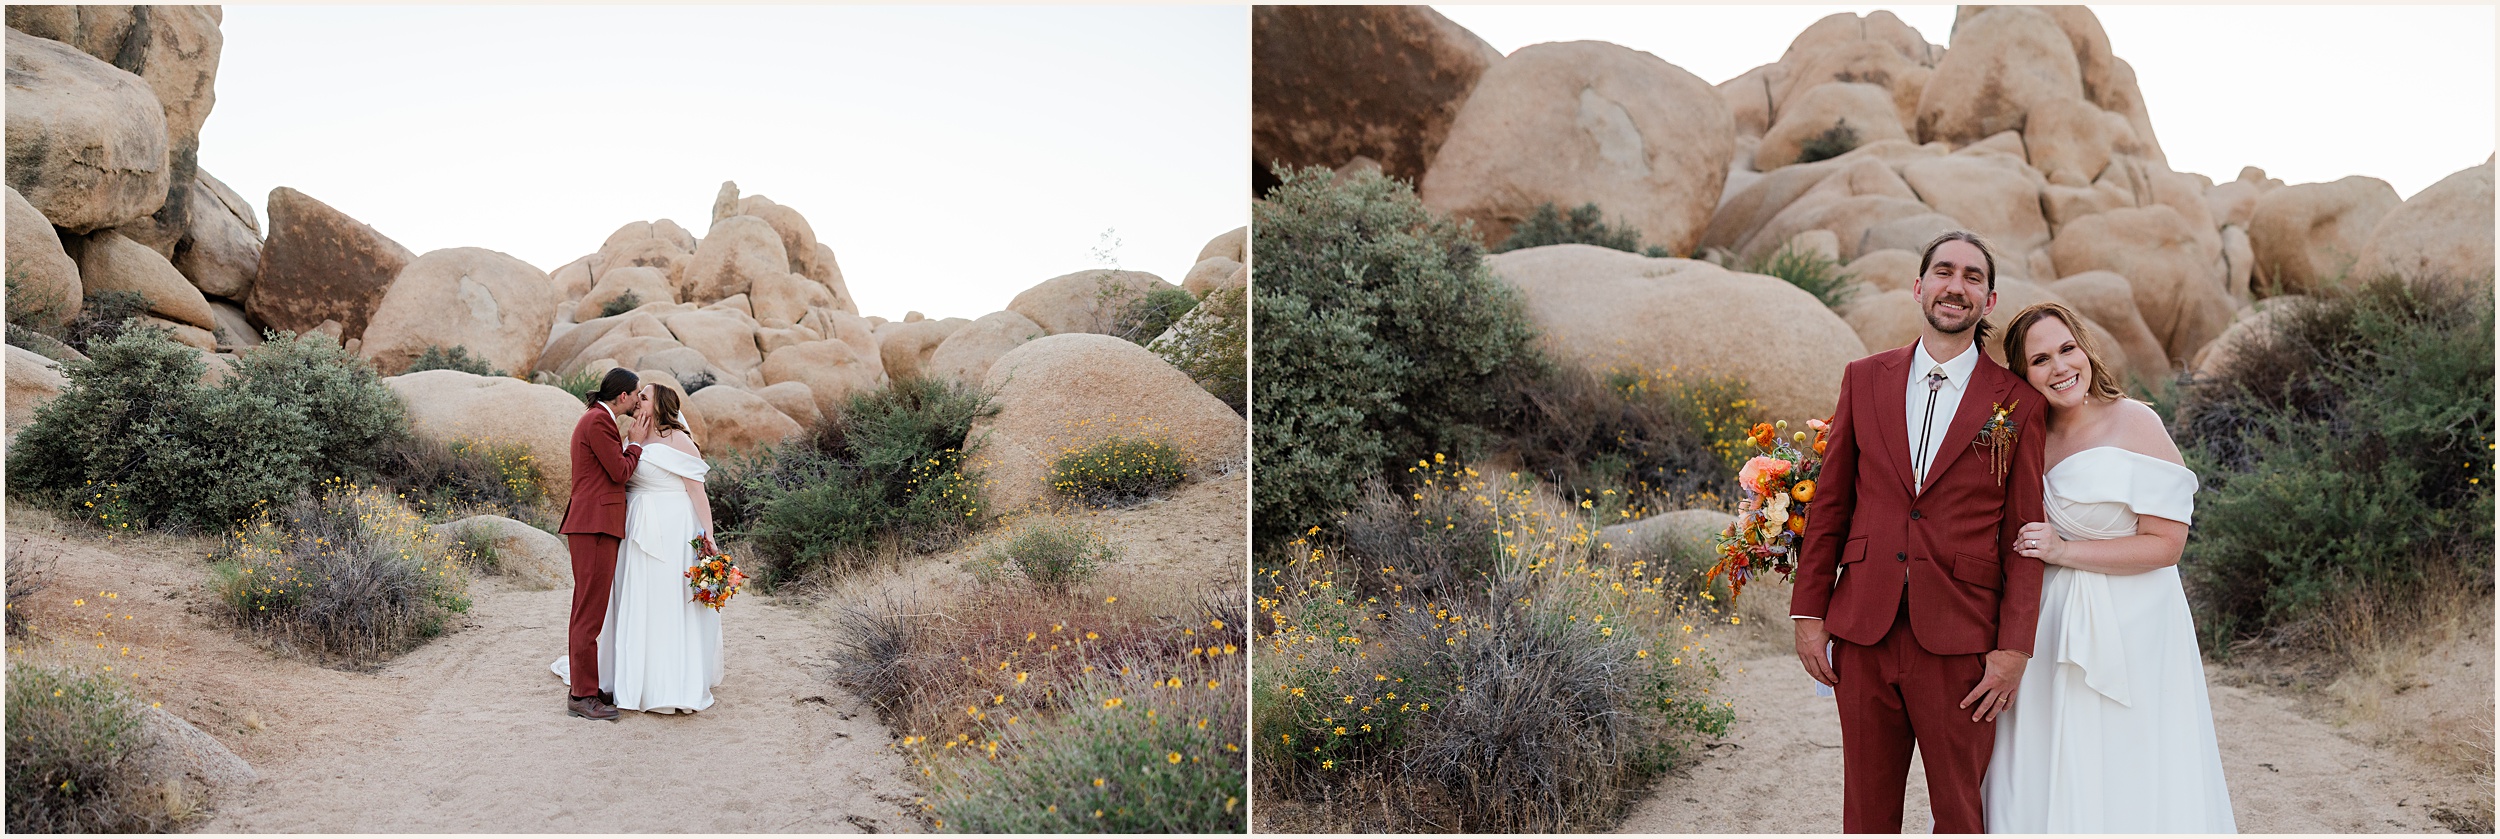 Jon-and-Christine_Joshua-Tree-Elopement-Photographer_0048 Elegant Retro Desert Elopement In Joshua Tree